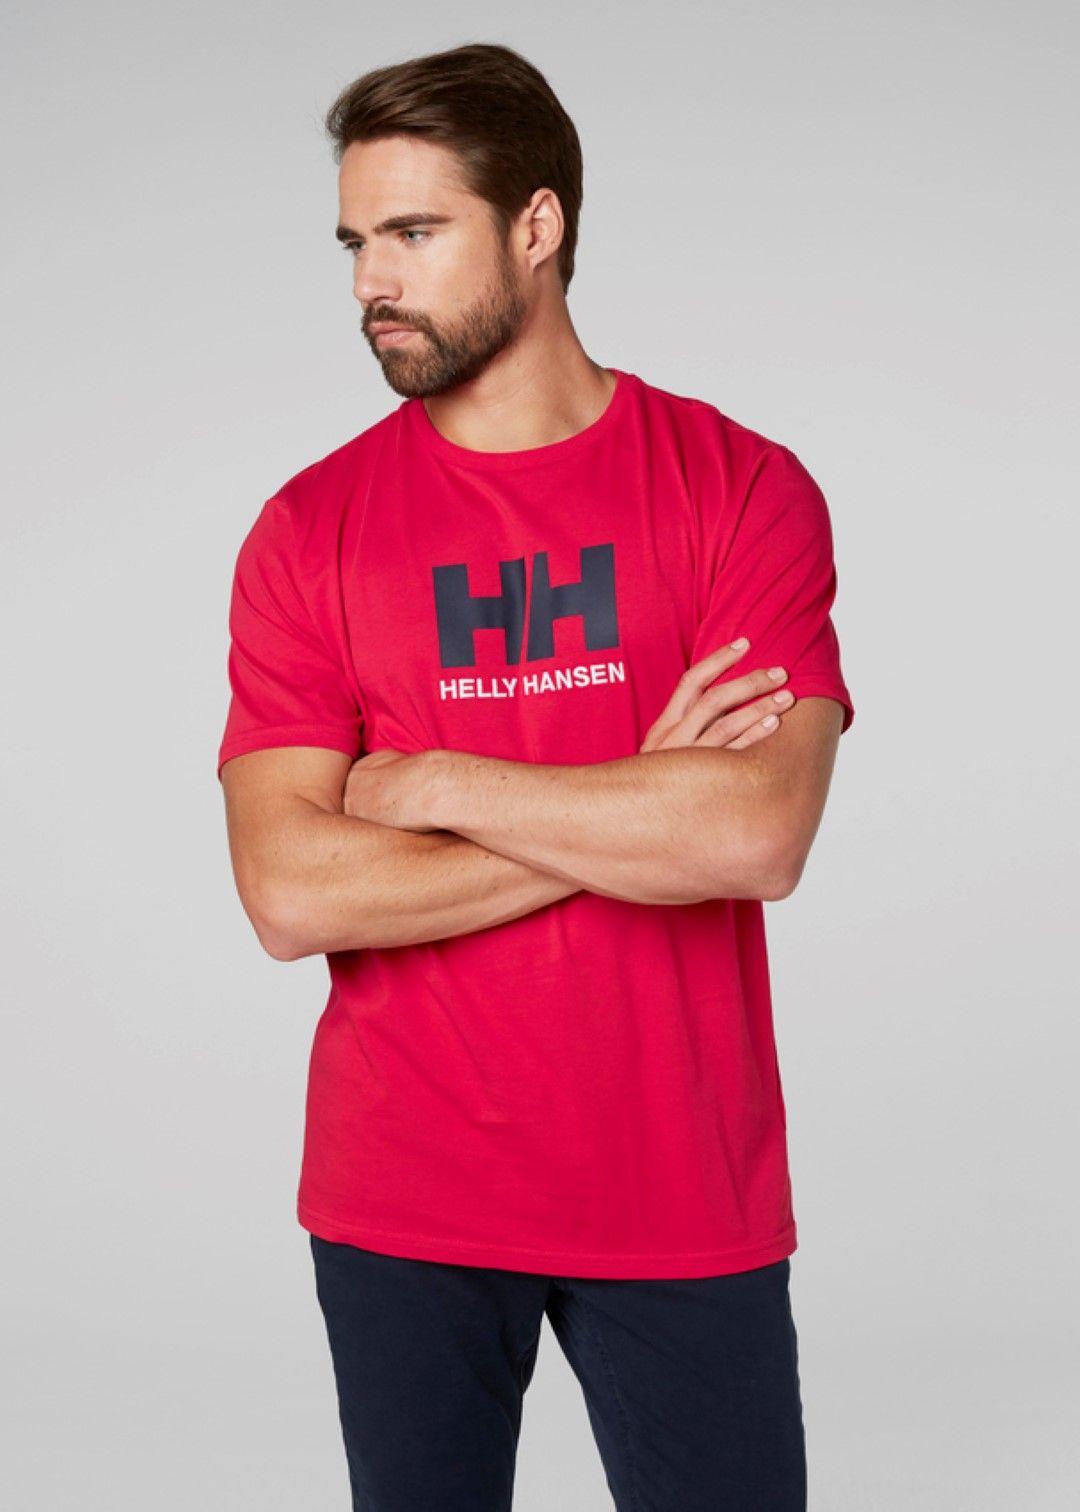 Red HH Logo - Helly Hansen Hh Logo T-Shirt Red L 7040055422344 | eBay